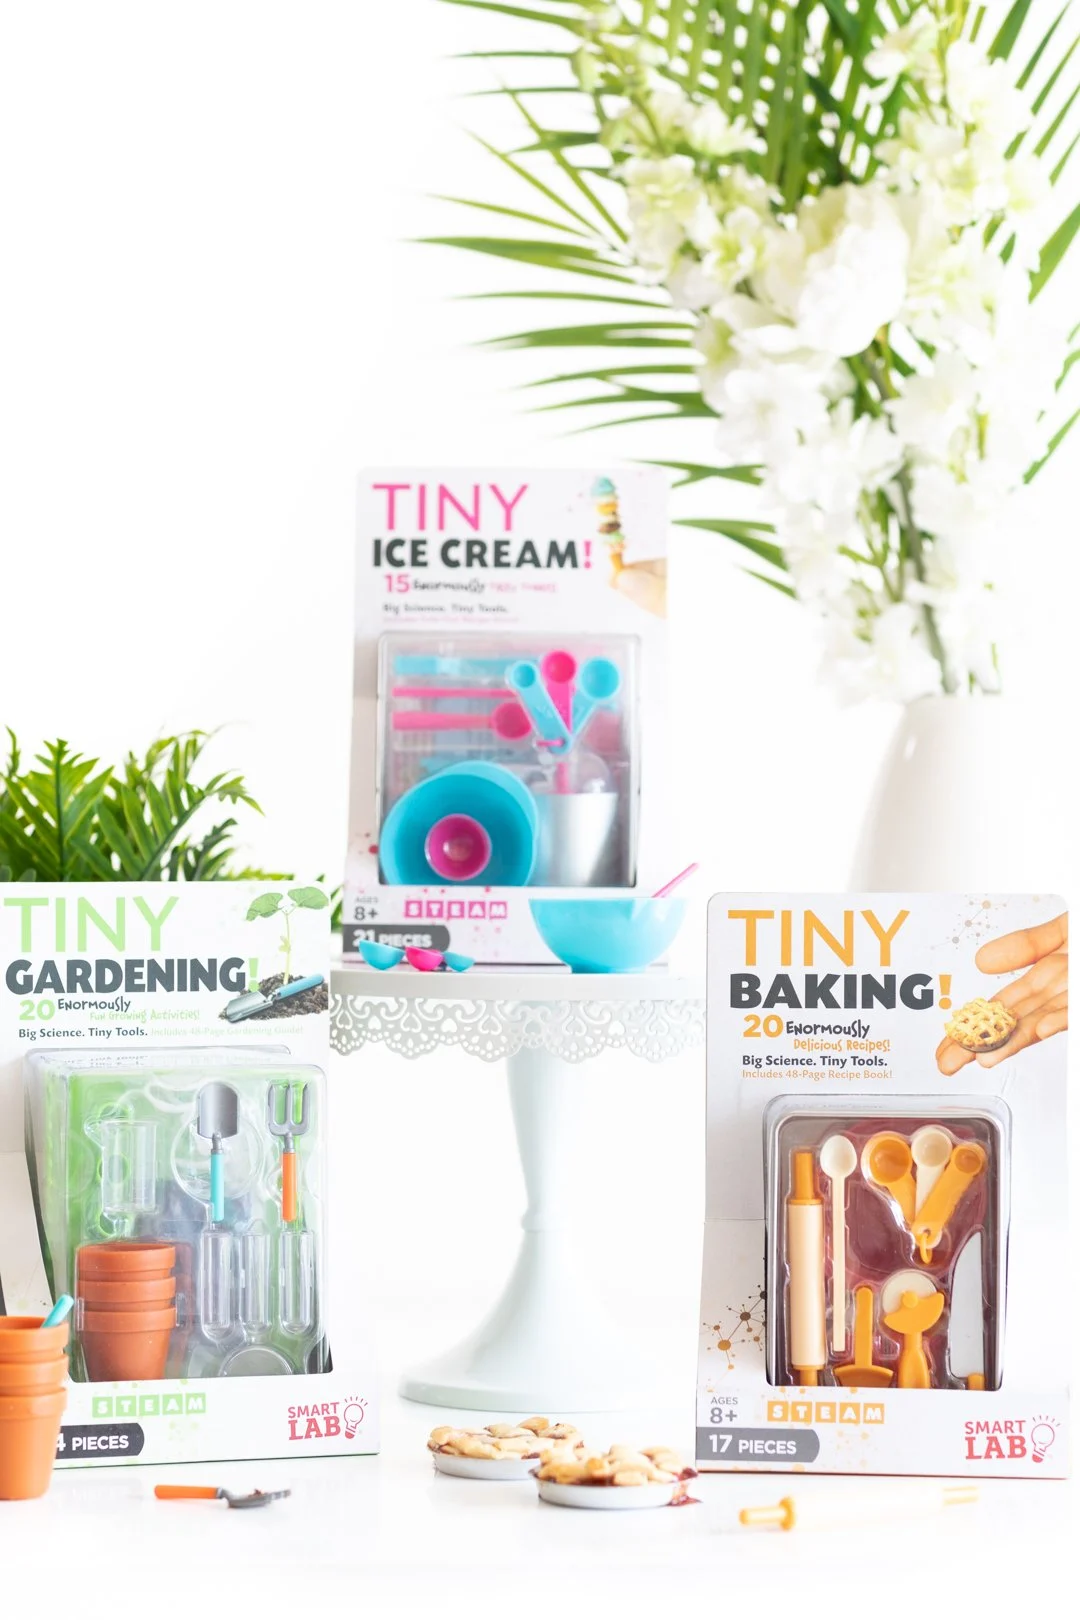 Tiny kits that help you make, bake and grow tiny foods. Available on Amazon